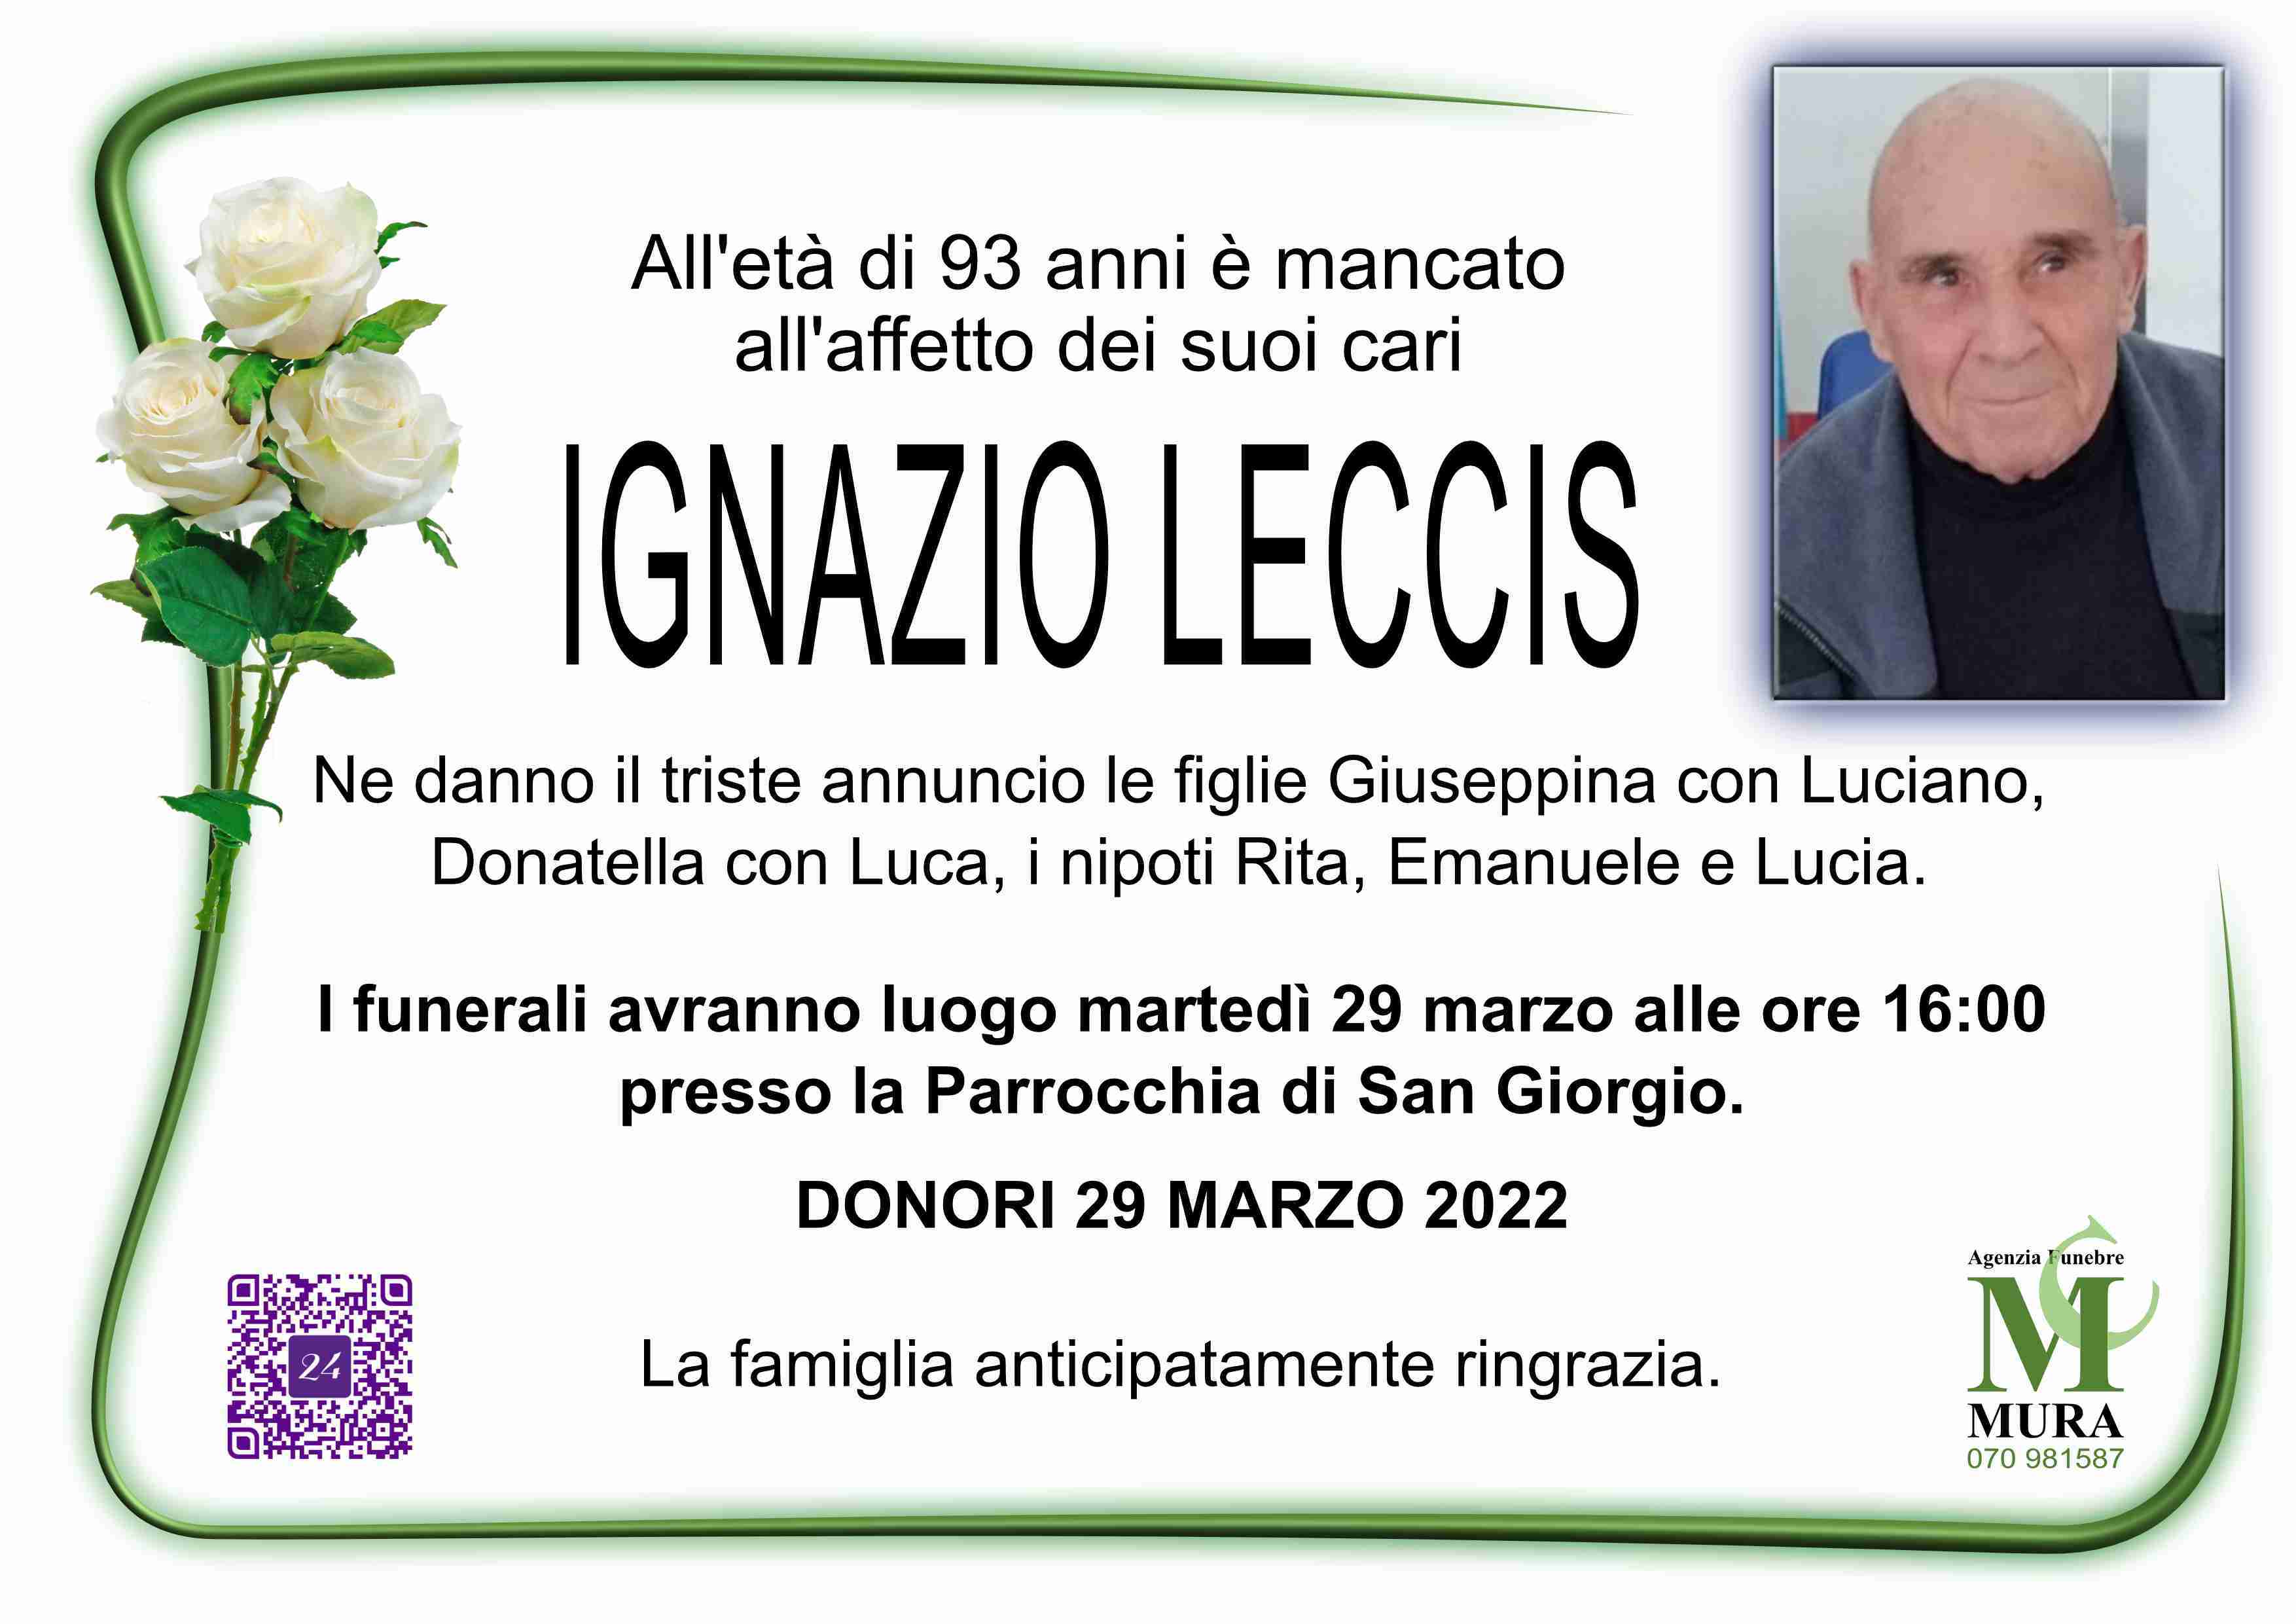 Ignazio Leccis